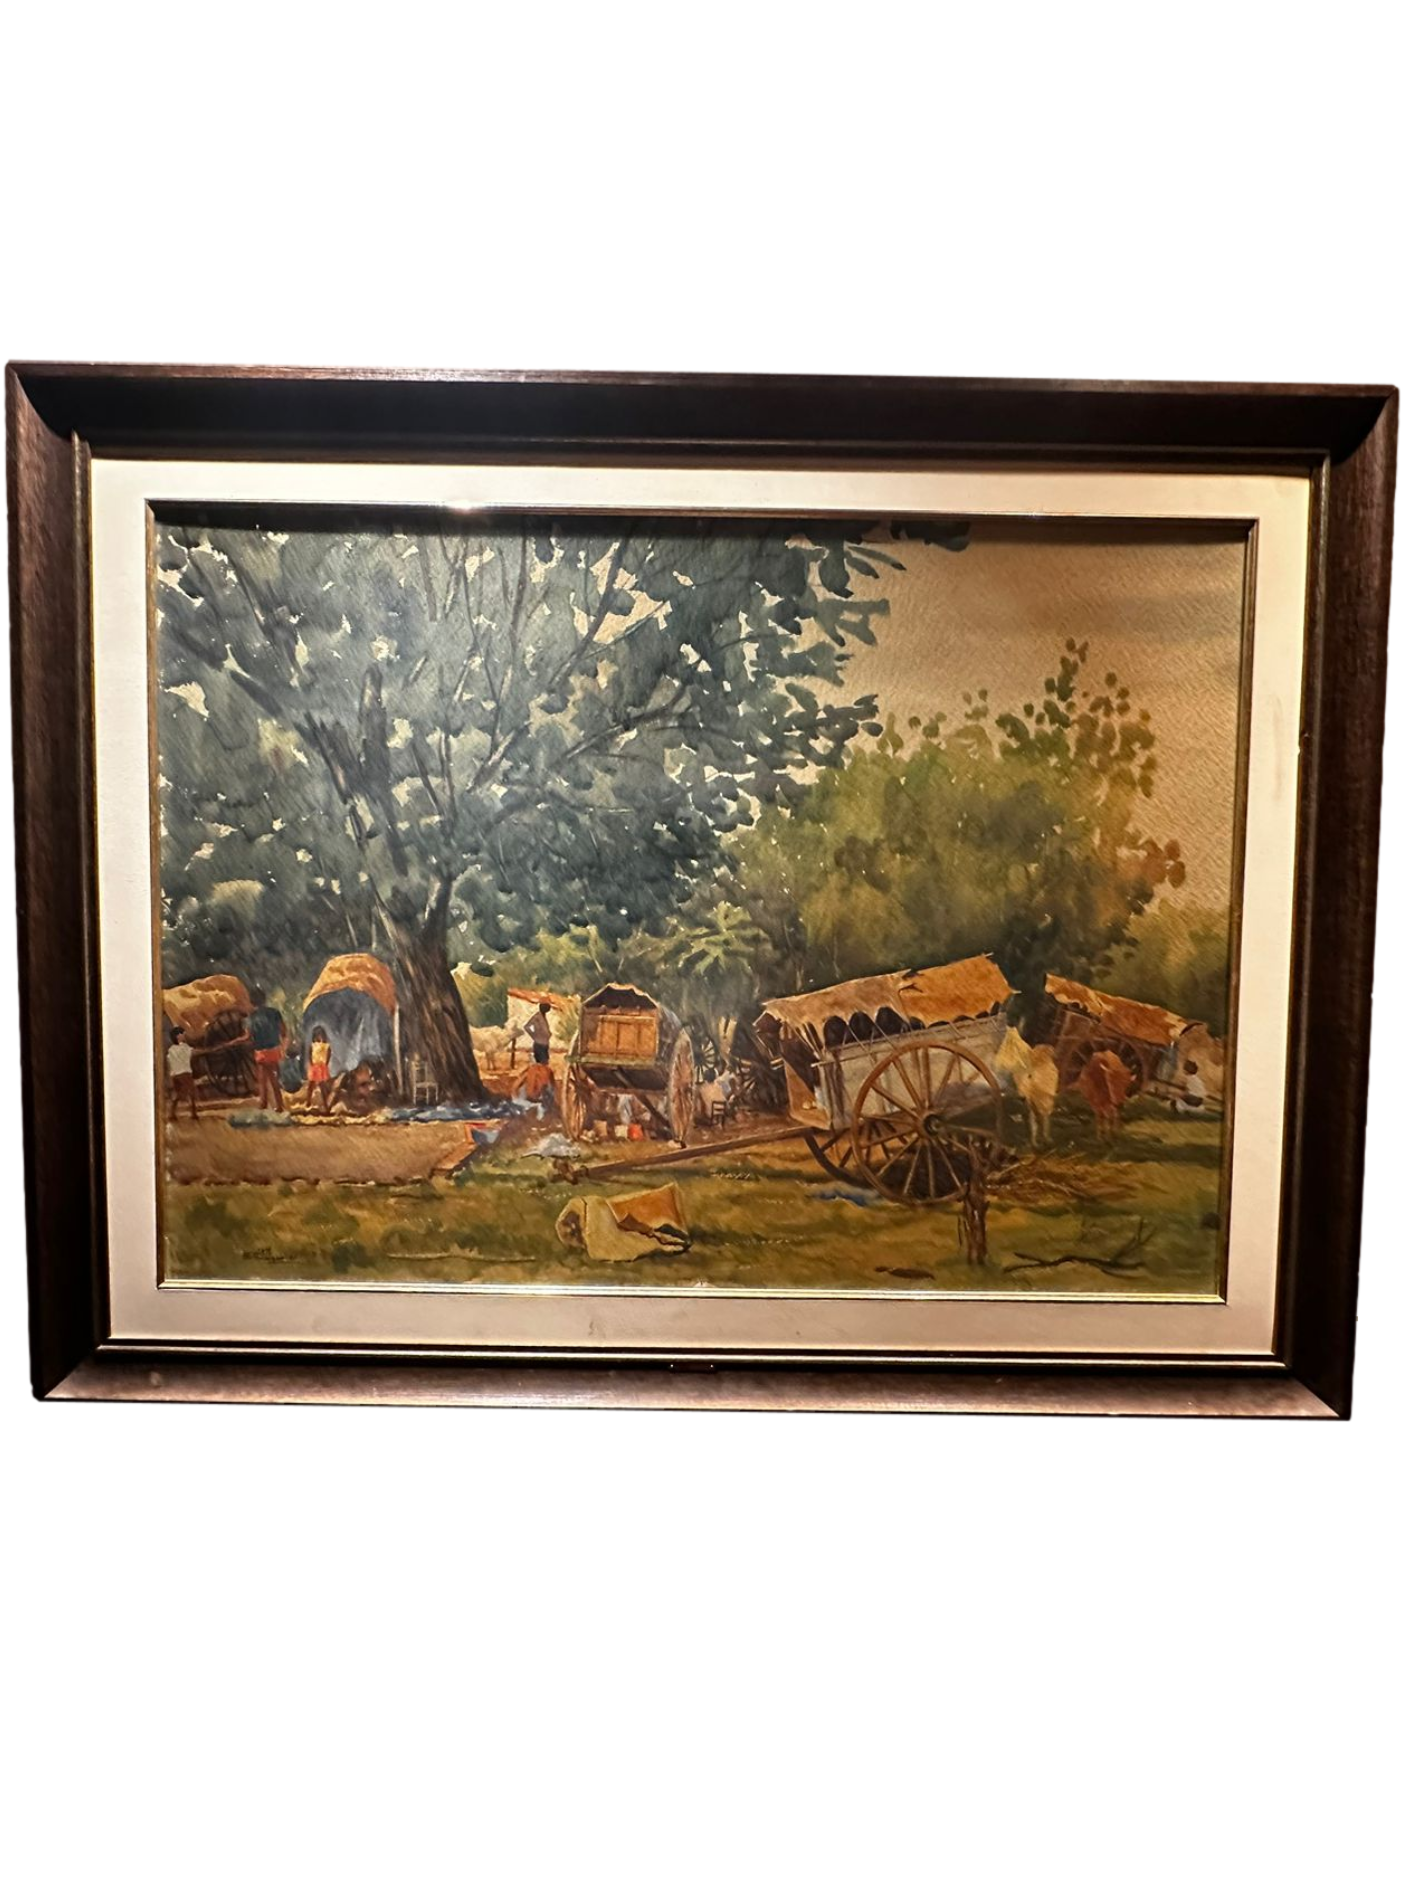 Cuadro "El Rancho" de Emili Aparici 1 m x 71 cm